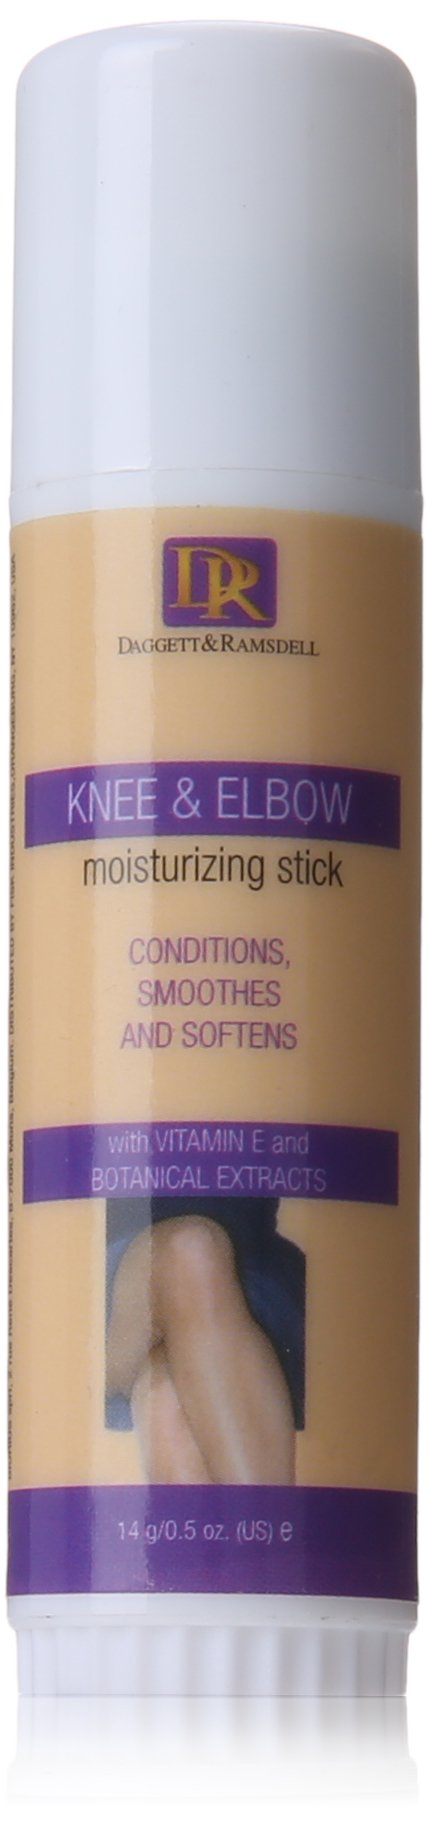 Dermactin-TS Knee & Elbow Stick, .05 oz.